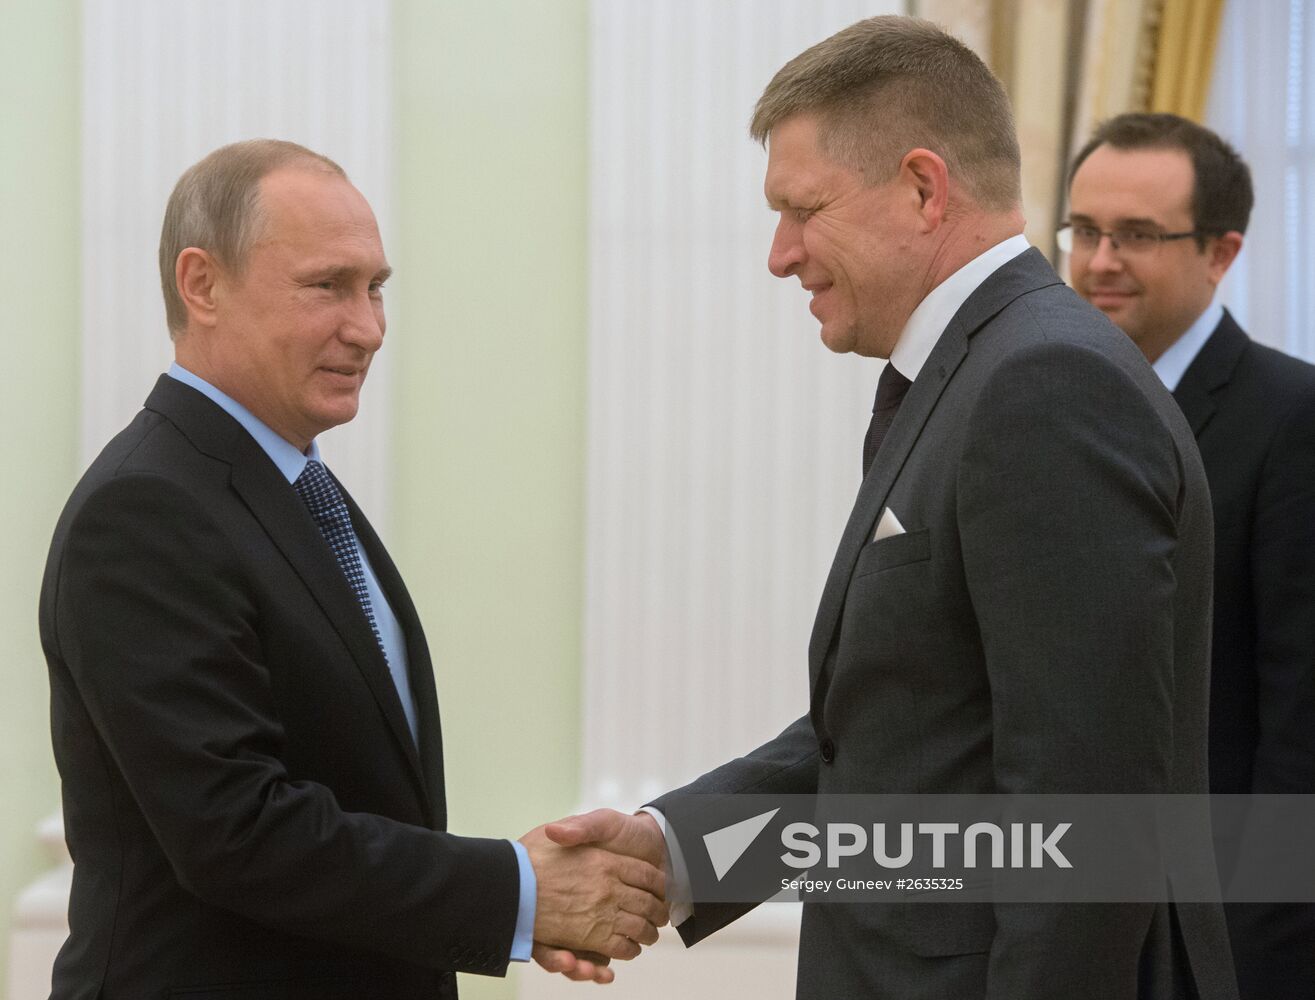 Russian President Vladimir Putin meets with Slovak Prime Minister Robert Fico